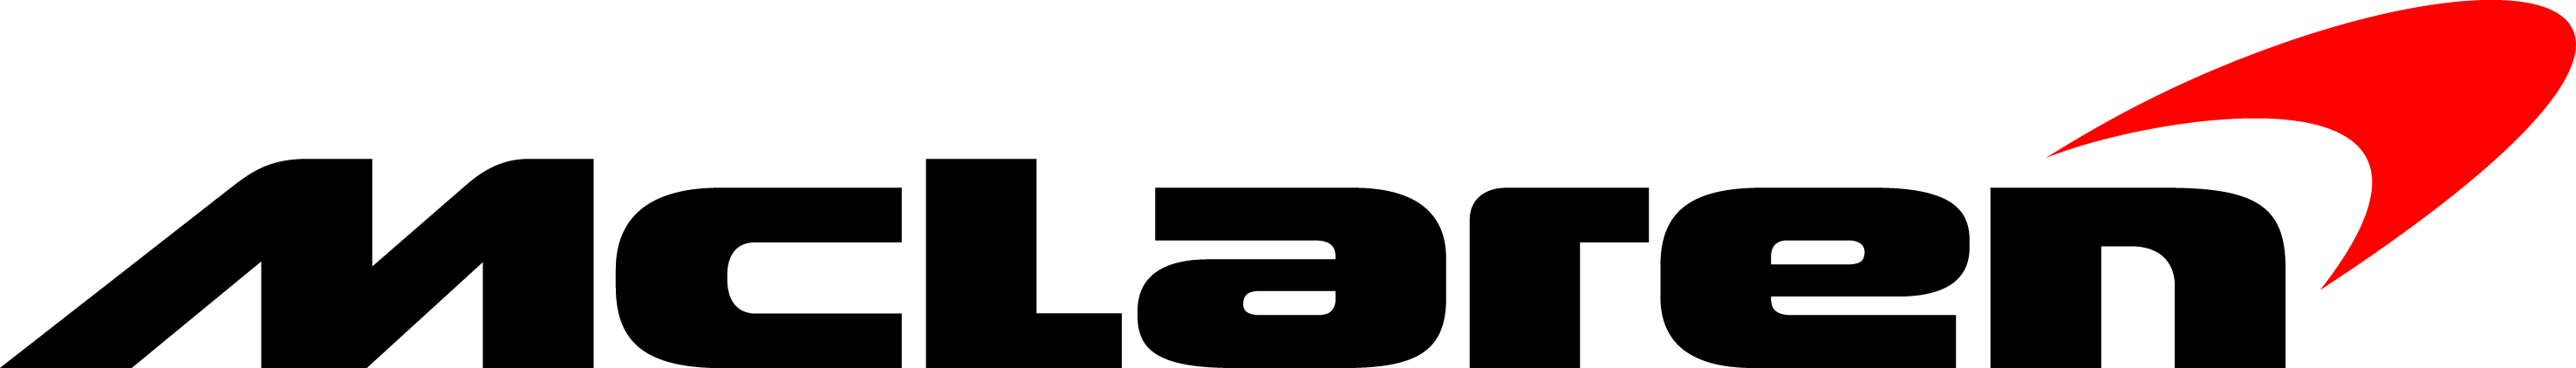 Mclaren Logo PNG Pic